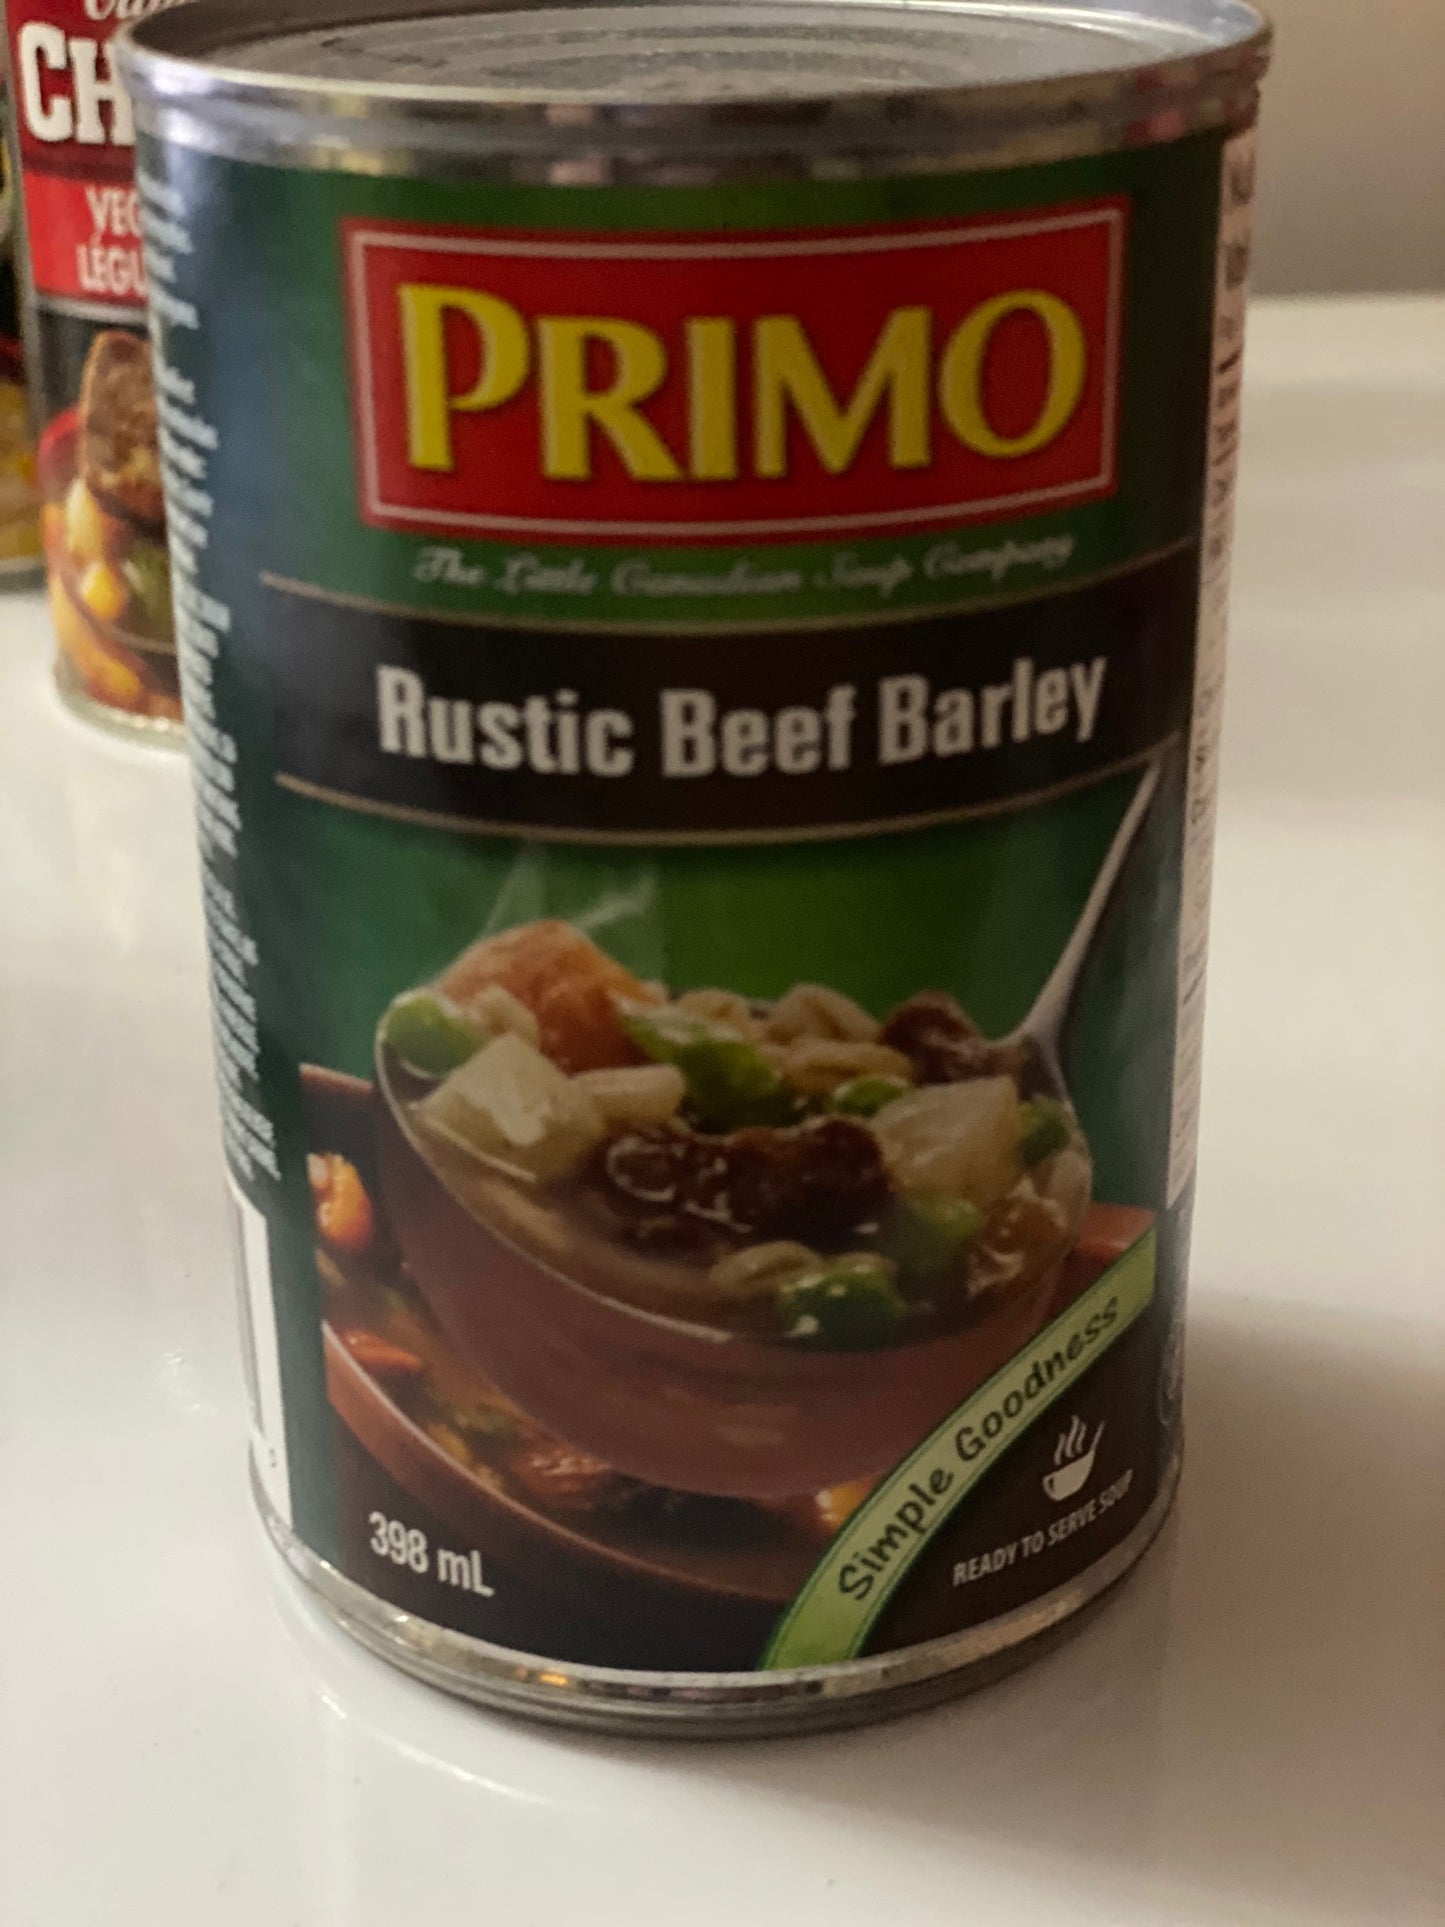 Primo Rustic Beef Barley